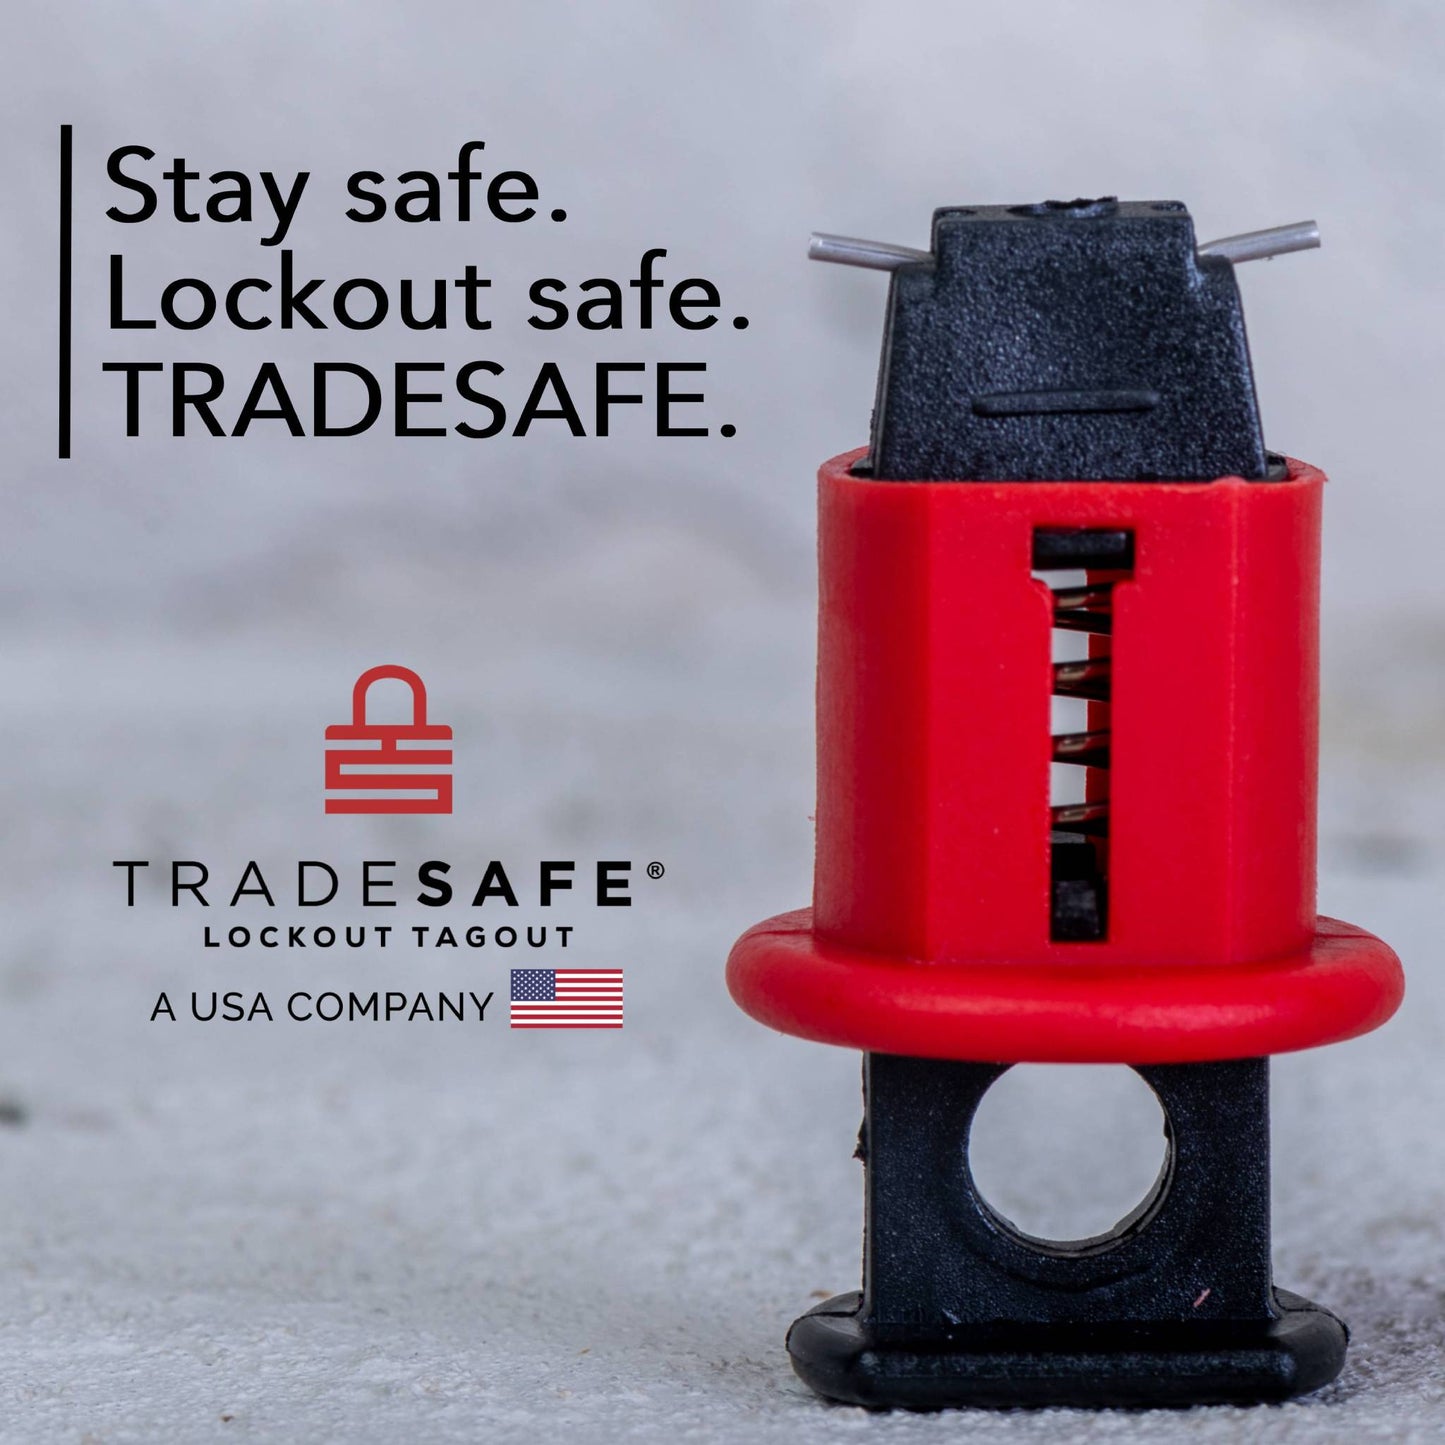 tradesafe lockout tagout branding image; stay safe. lockout safe. tradesafe.